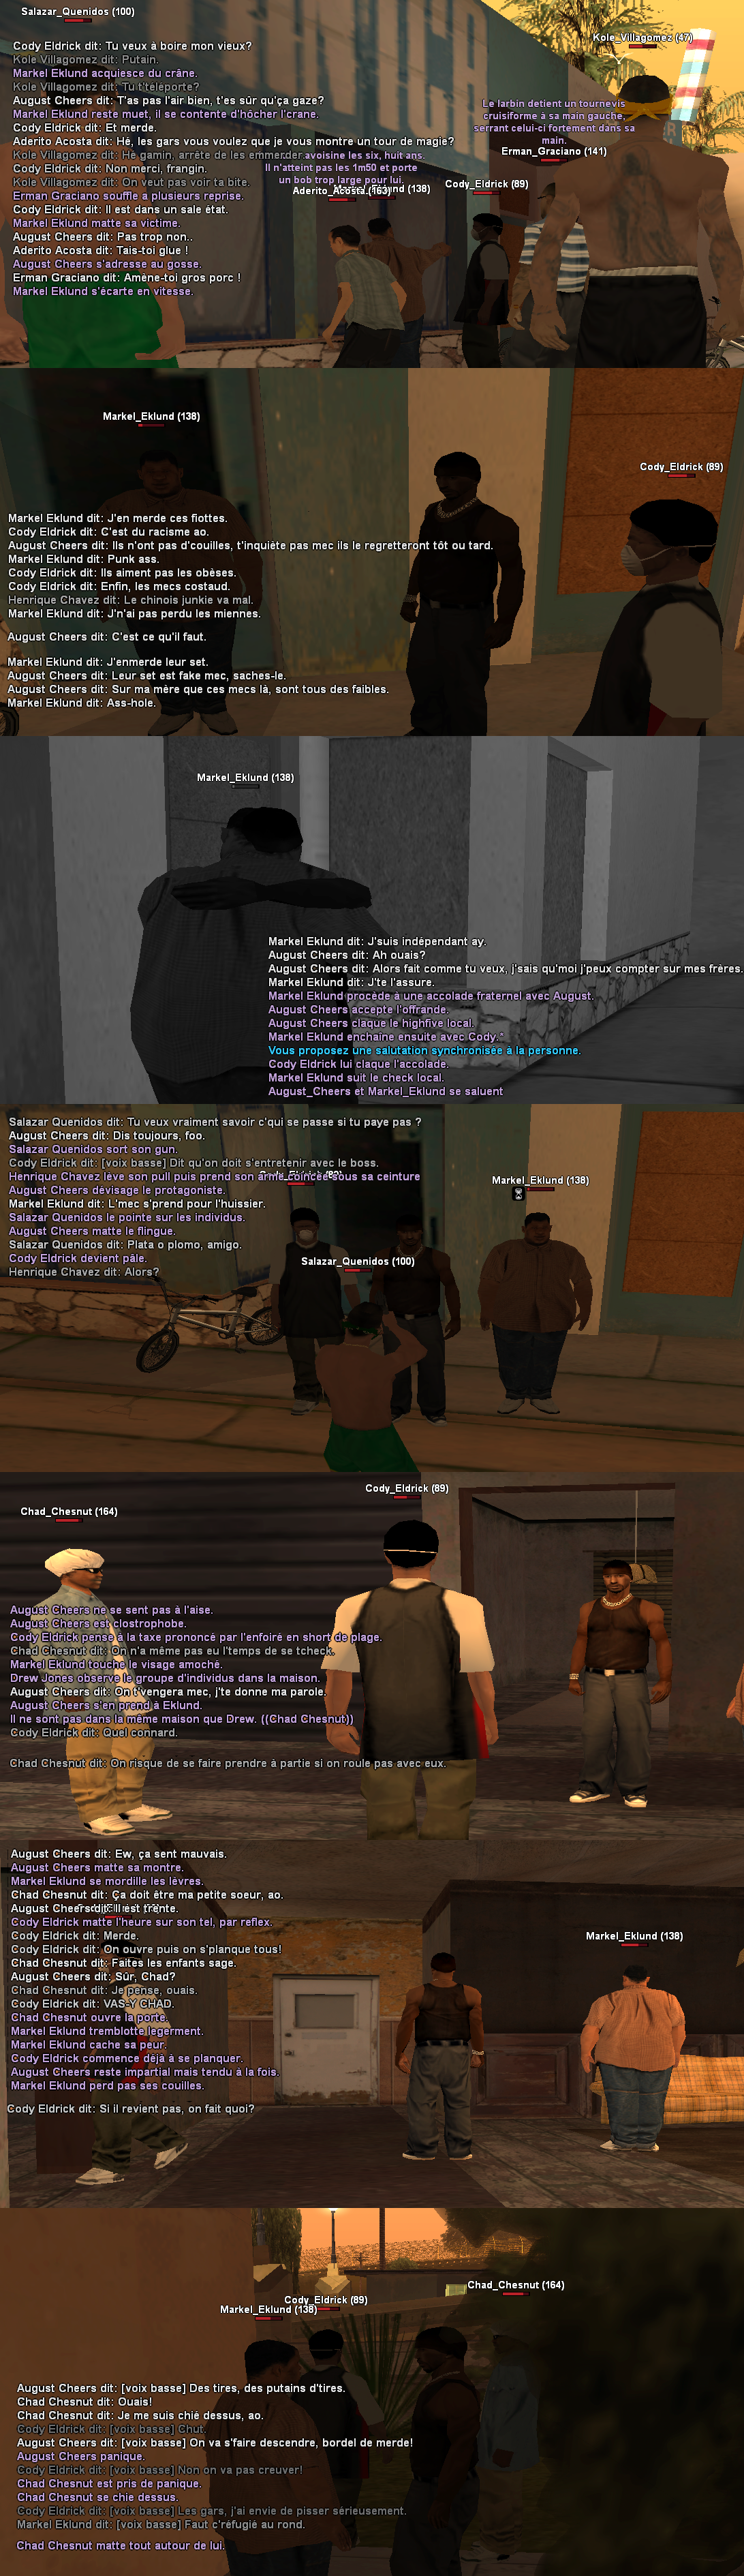 Ganton Gangsters Crips. - Page 2 Oml2